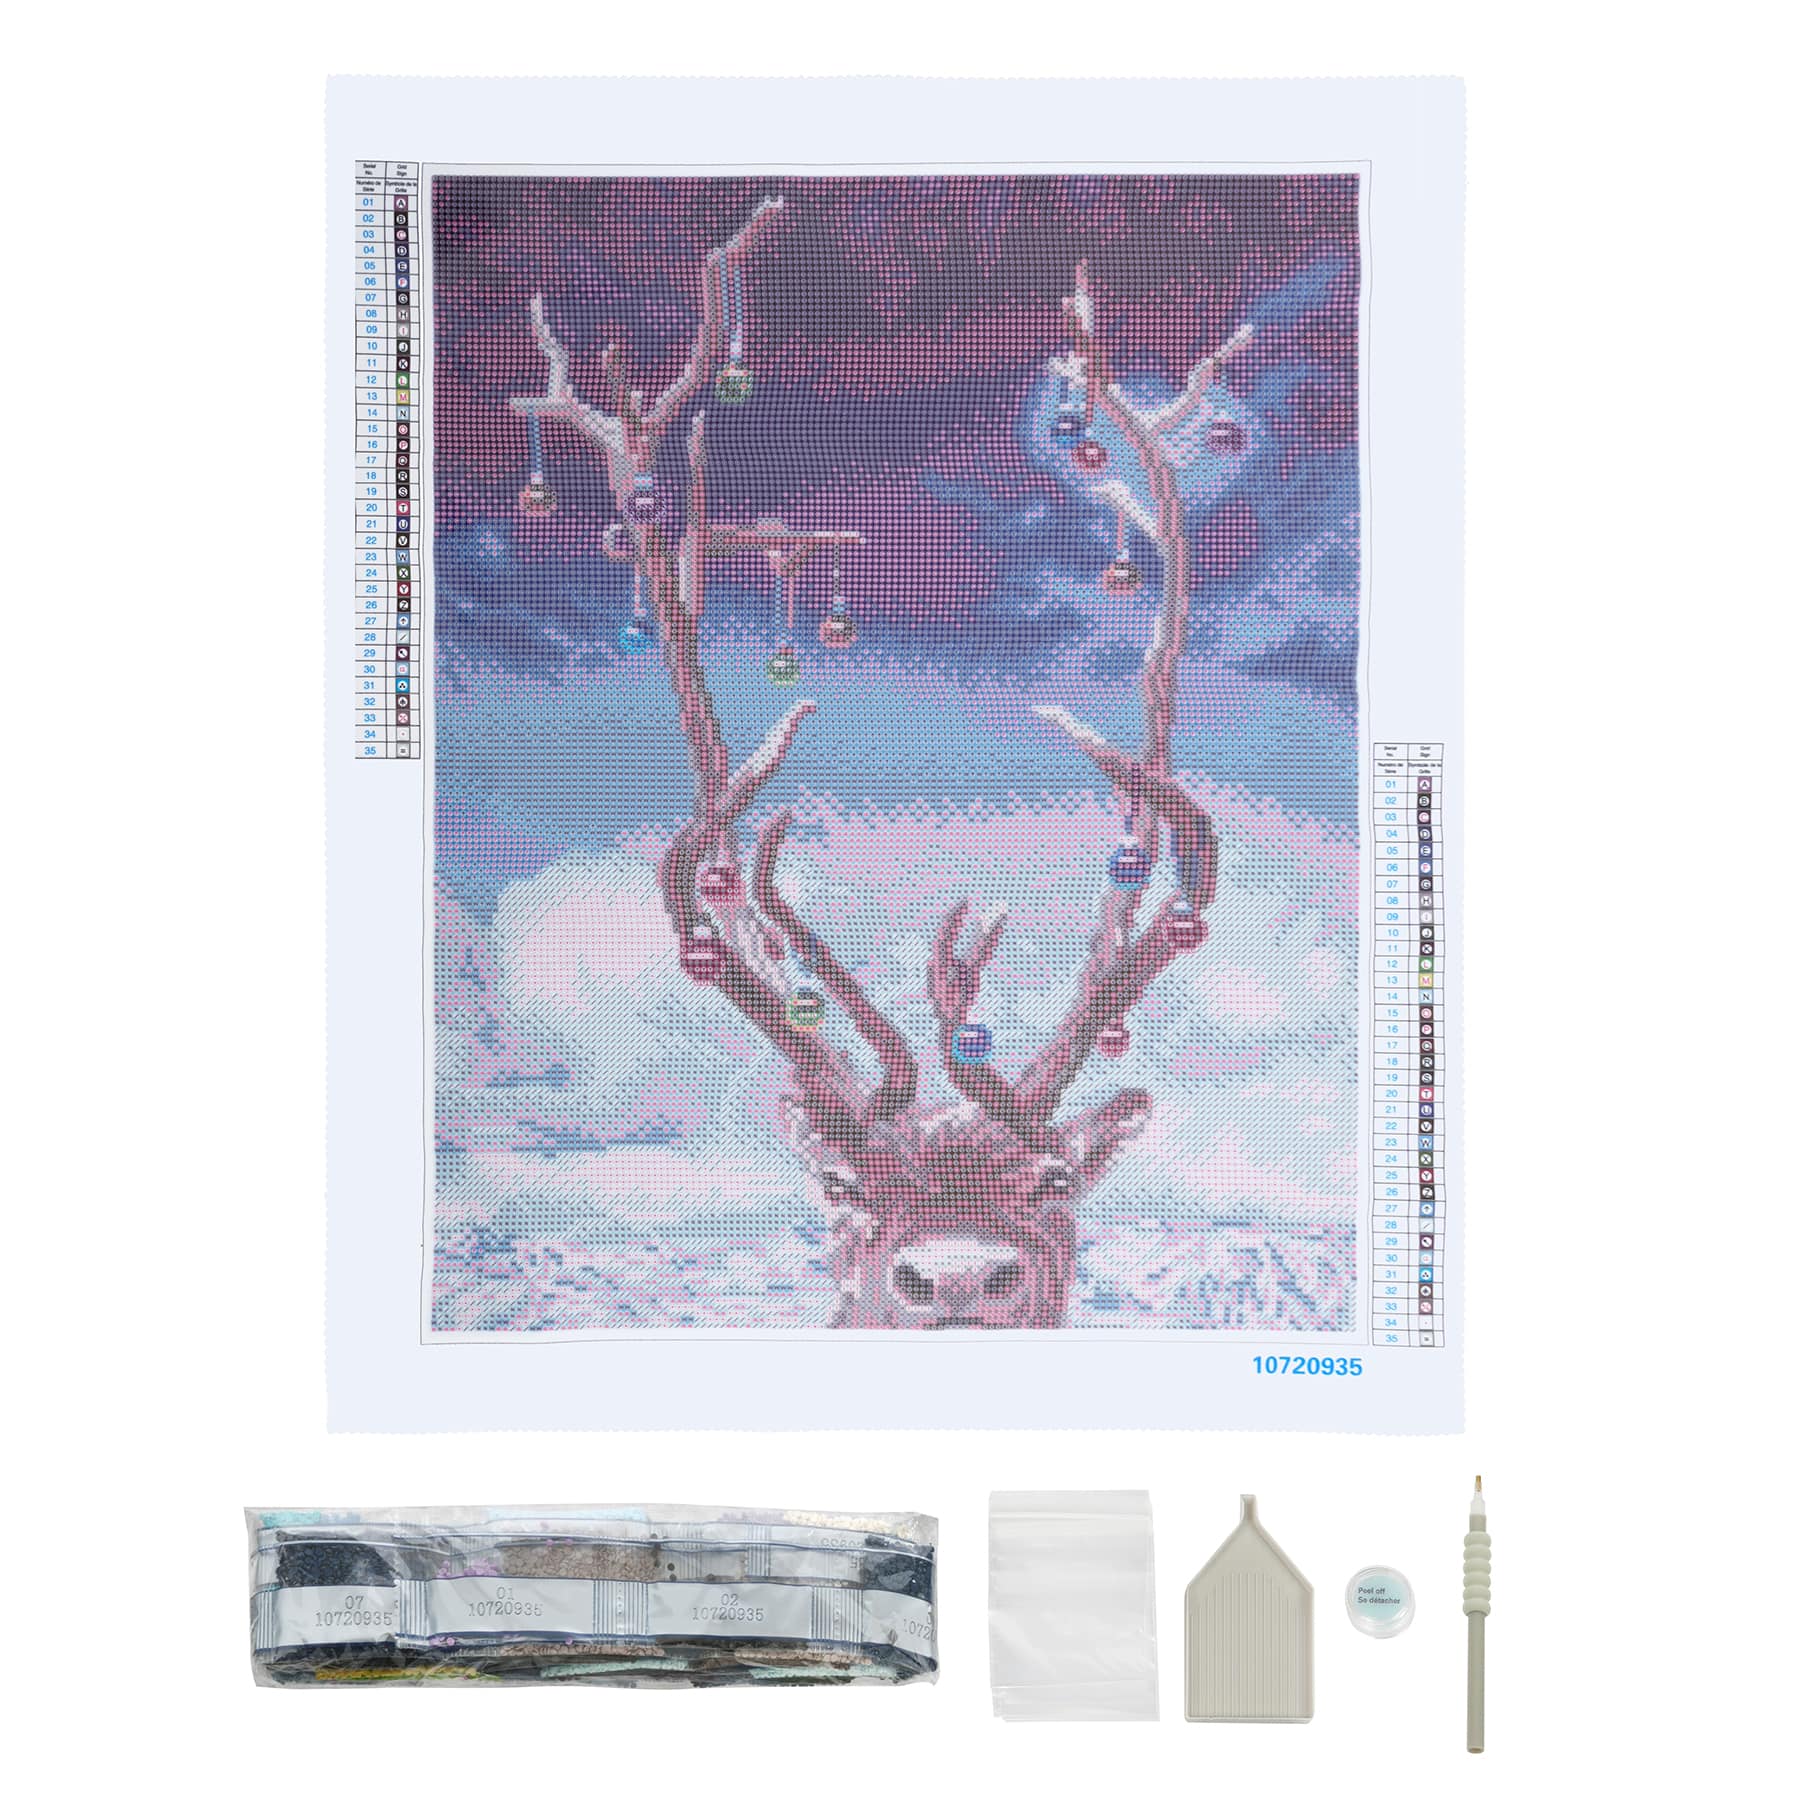 Santa Diamond Art Card Kit by Make Market® Christmas-Christmas Crafts 